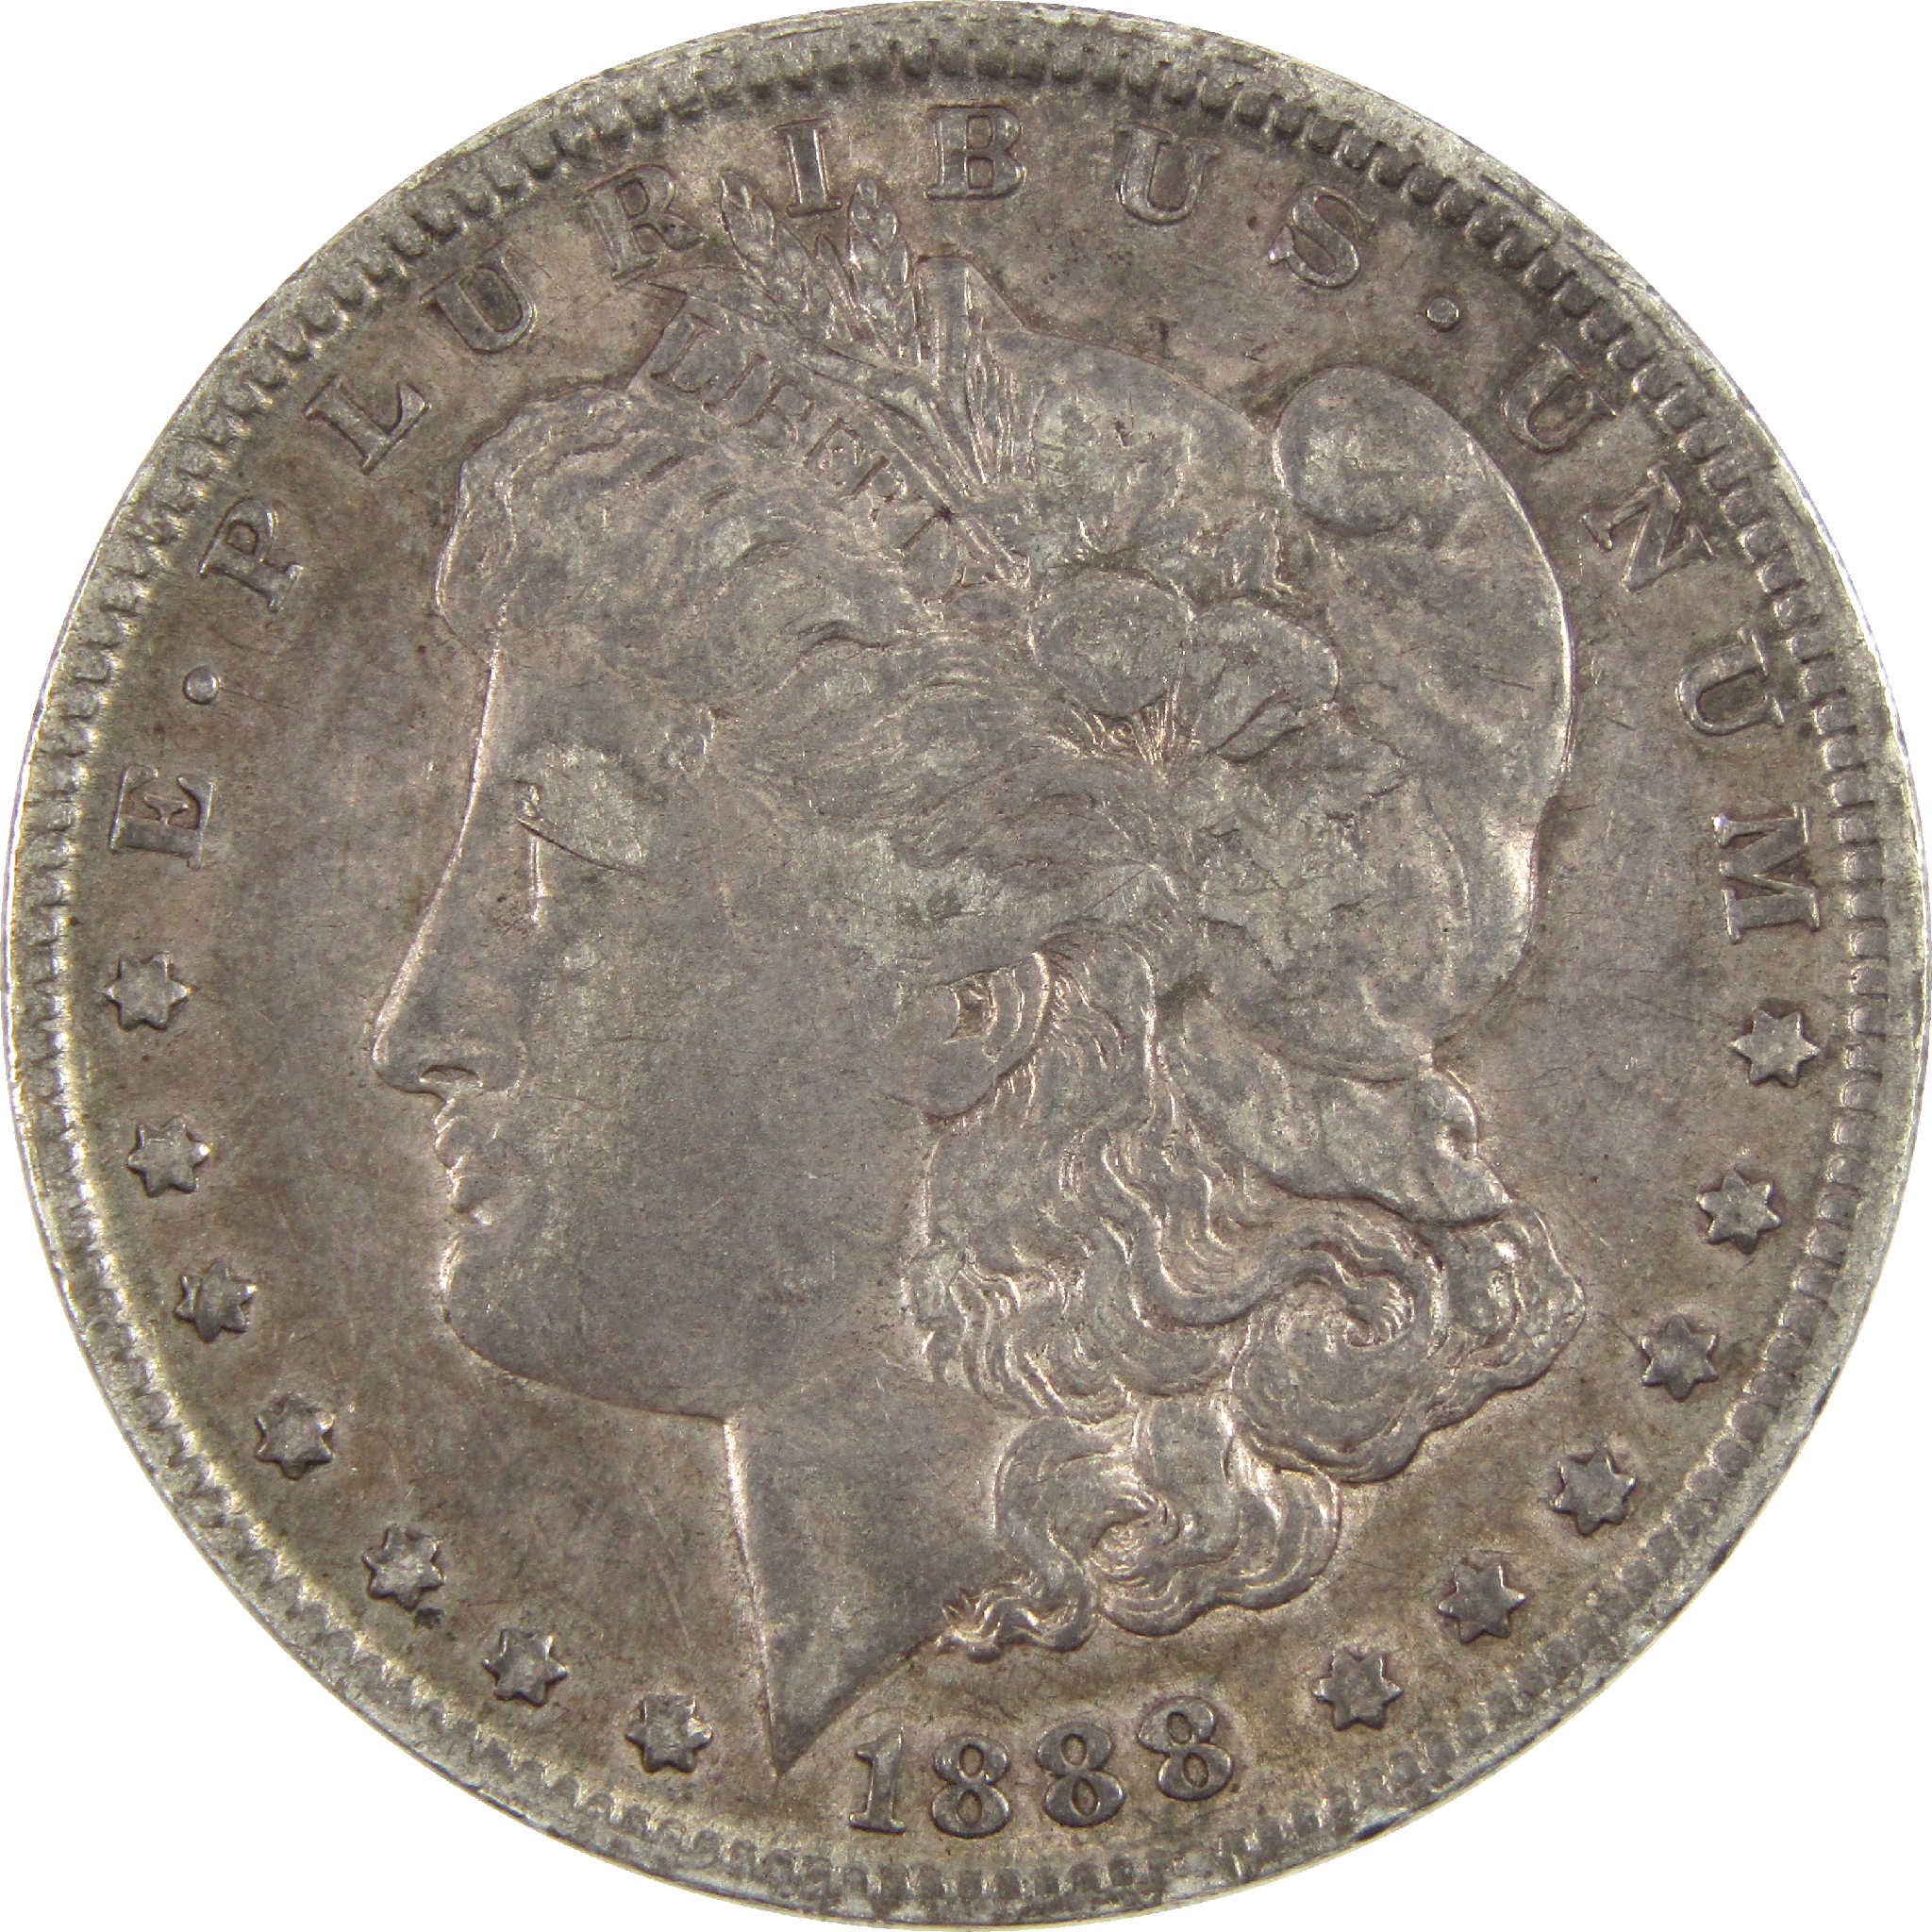 1888 O Hot Lips Morgan Dollar VF Very Fine Silver $1 Coin SKU:CPC6166 - Morgan coin - Morgan silver dollar - Morgan silver dollar for sale - Profile Coins &amp; Collectibles